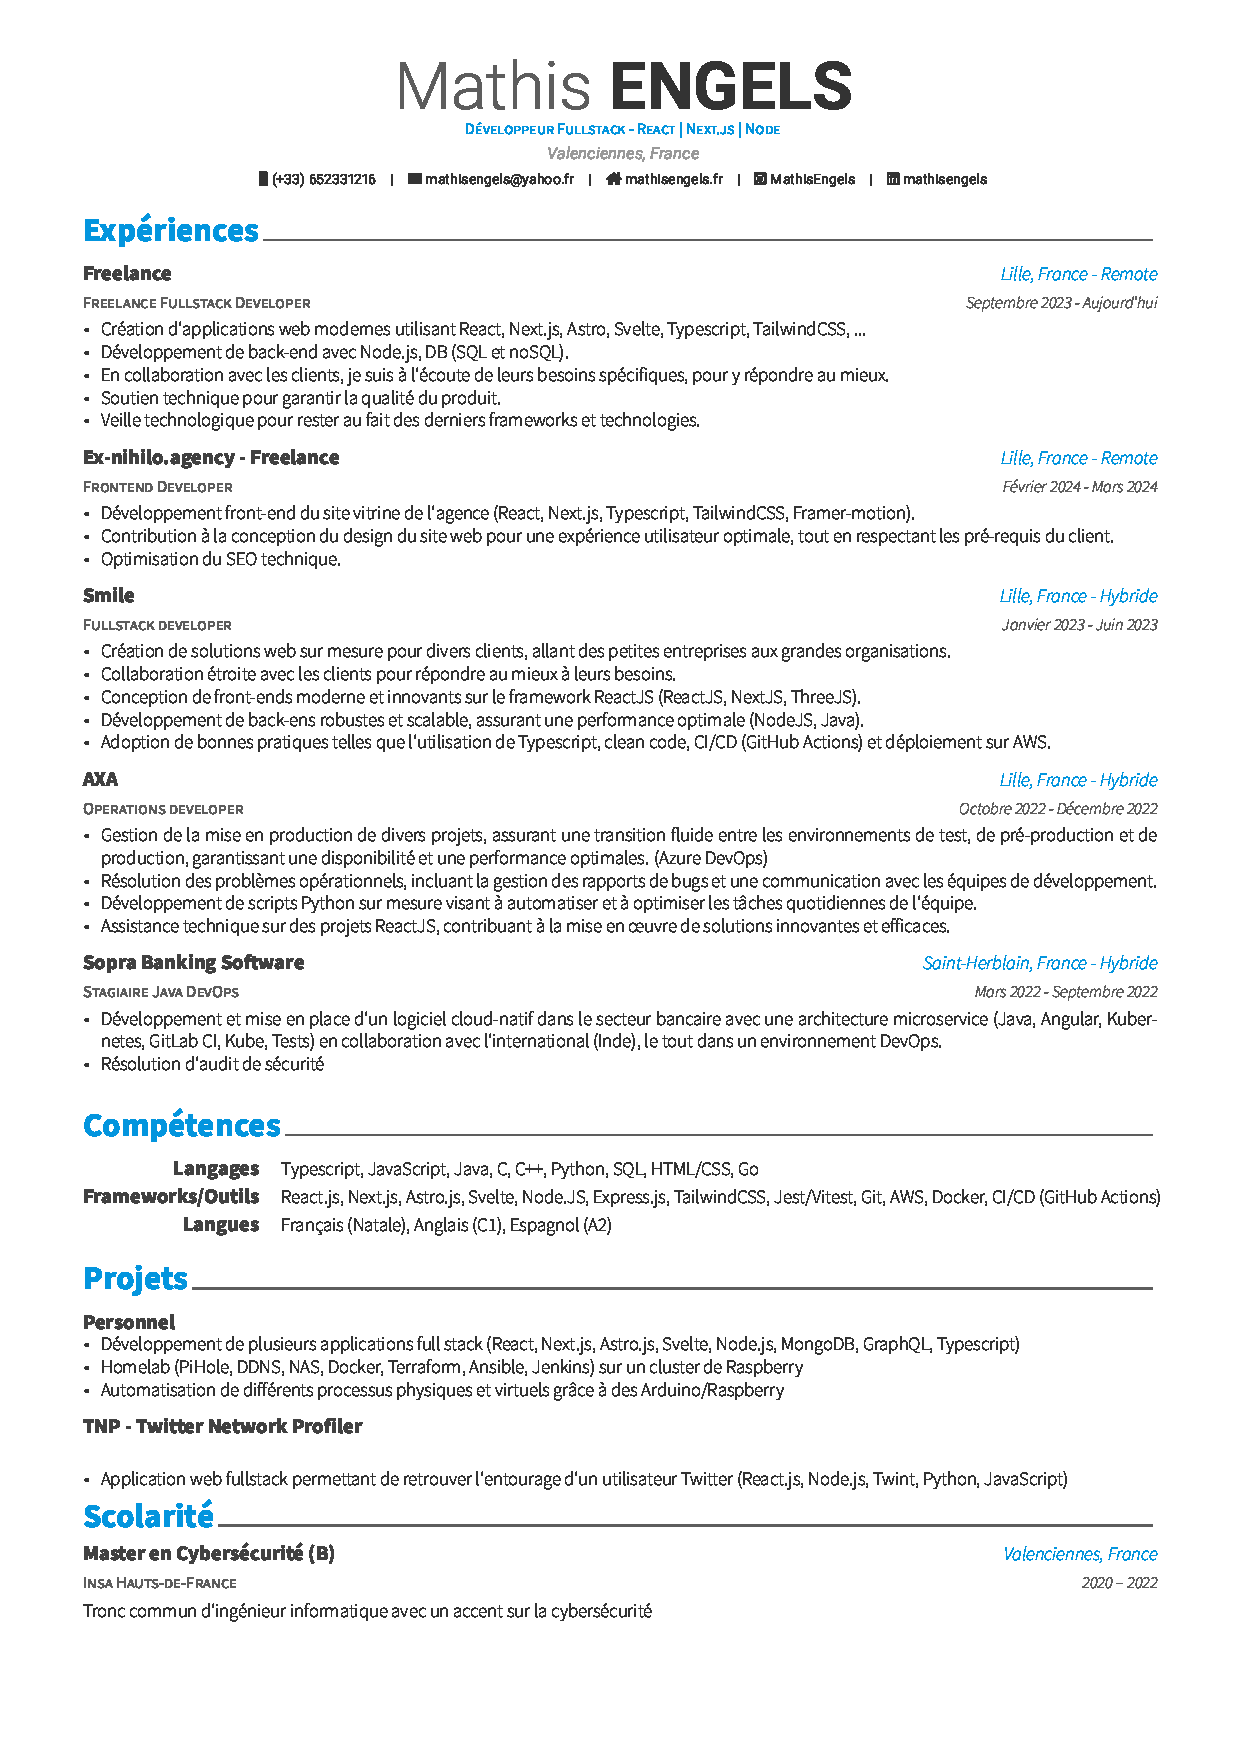 French resume